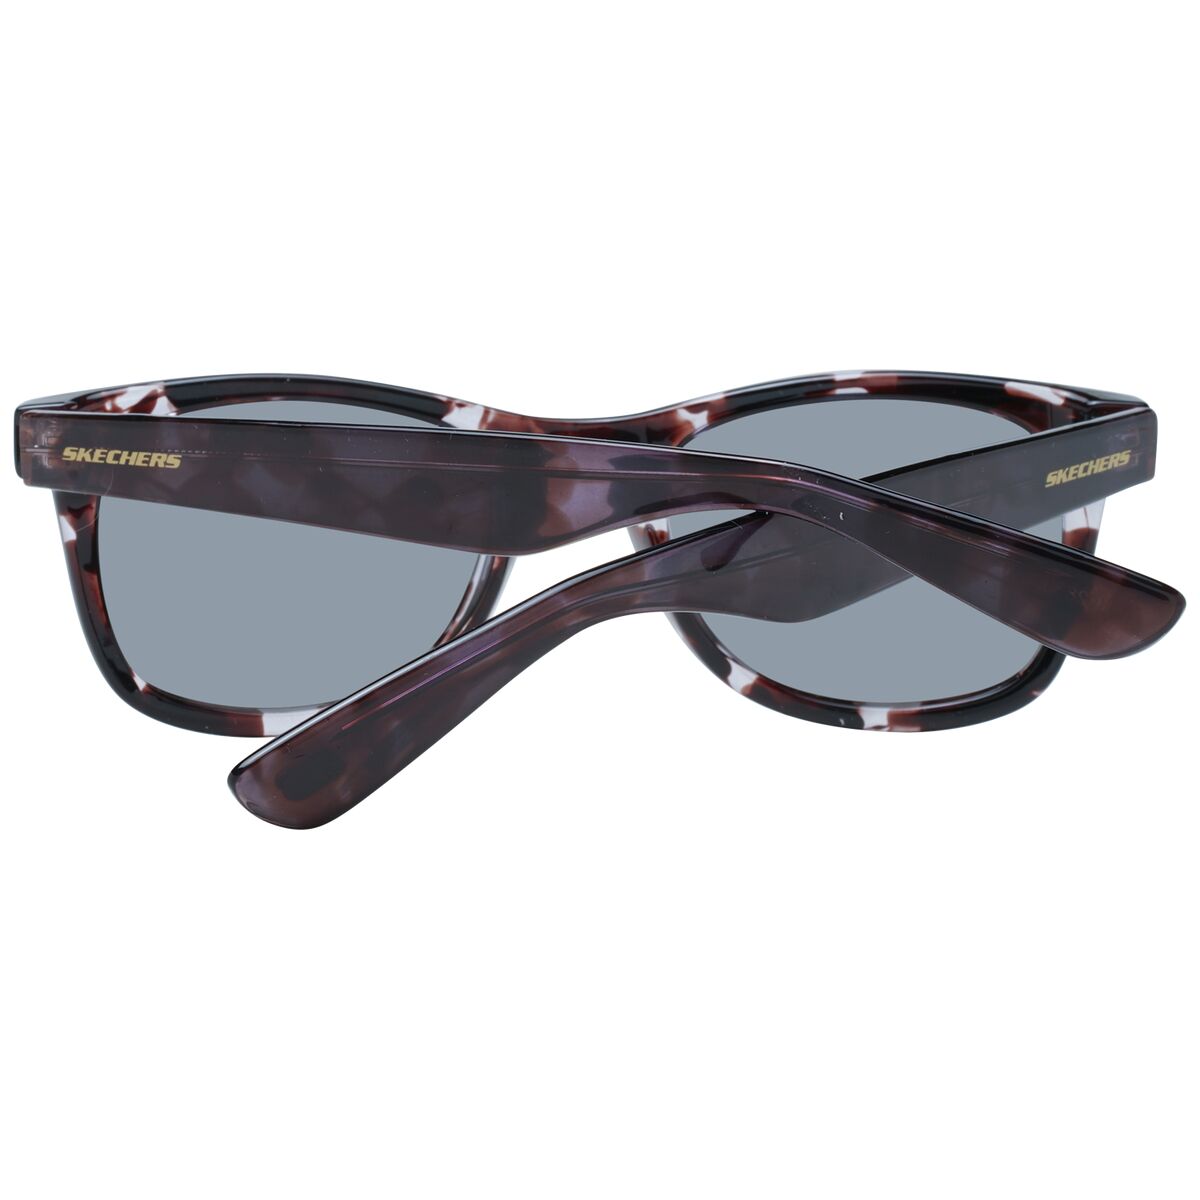 Kaufe Unisex-Sonnenbrille Skechers SE6216 5155D bei AWK Flagship um € 56.00